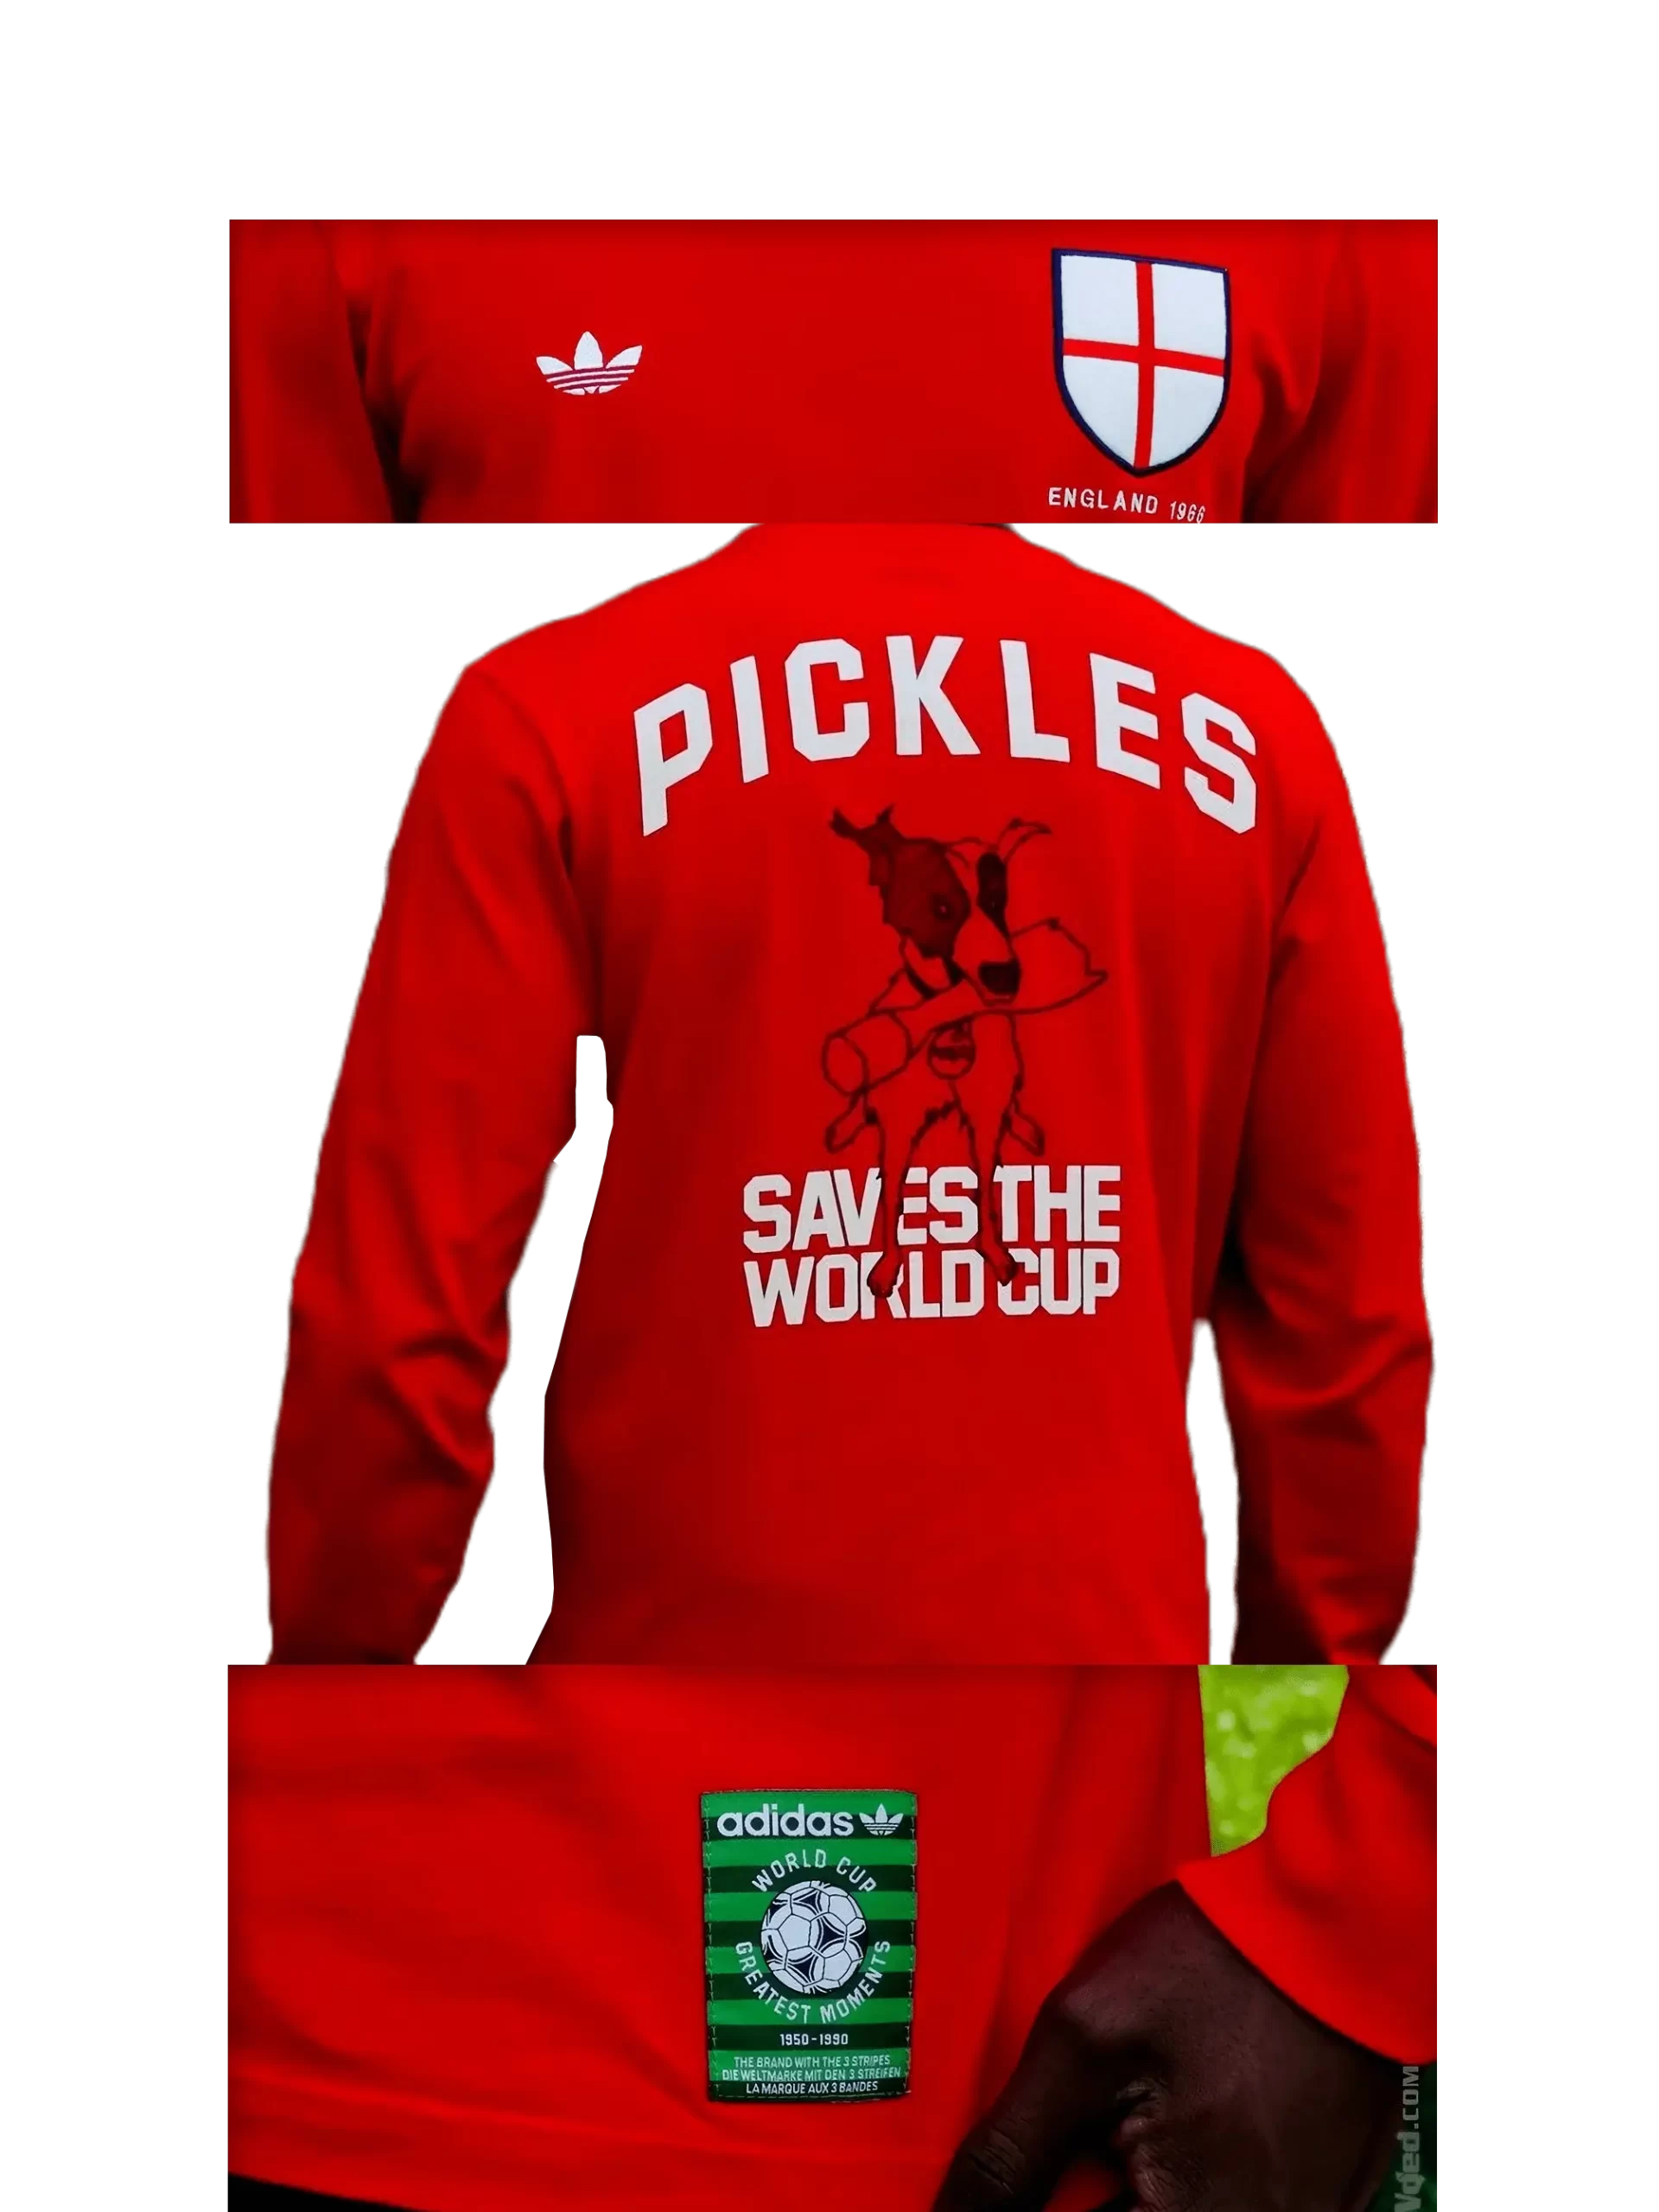 Men's 2006 England '66 Pickles LS by Adidas Originals: Blissful (EnLawded.com file #lmchk46737ip2y122425kg9st)